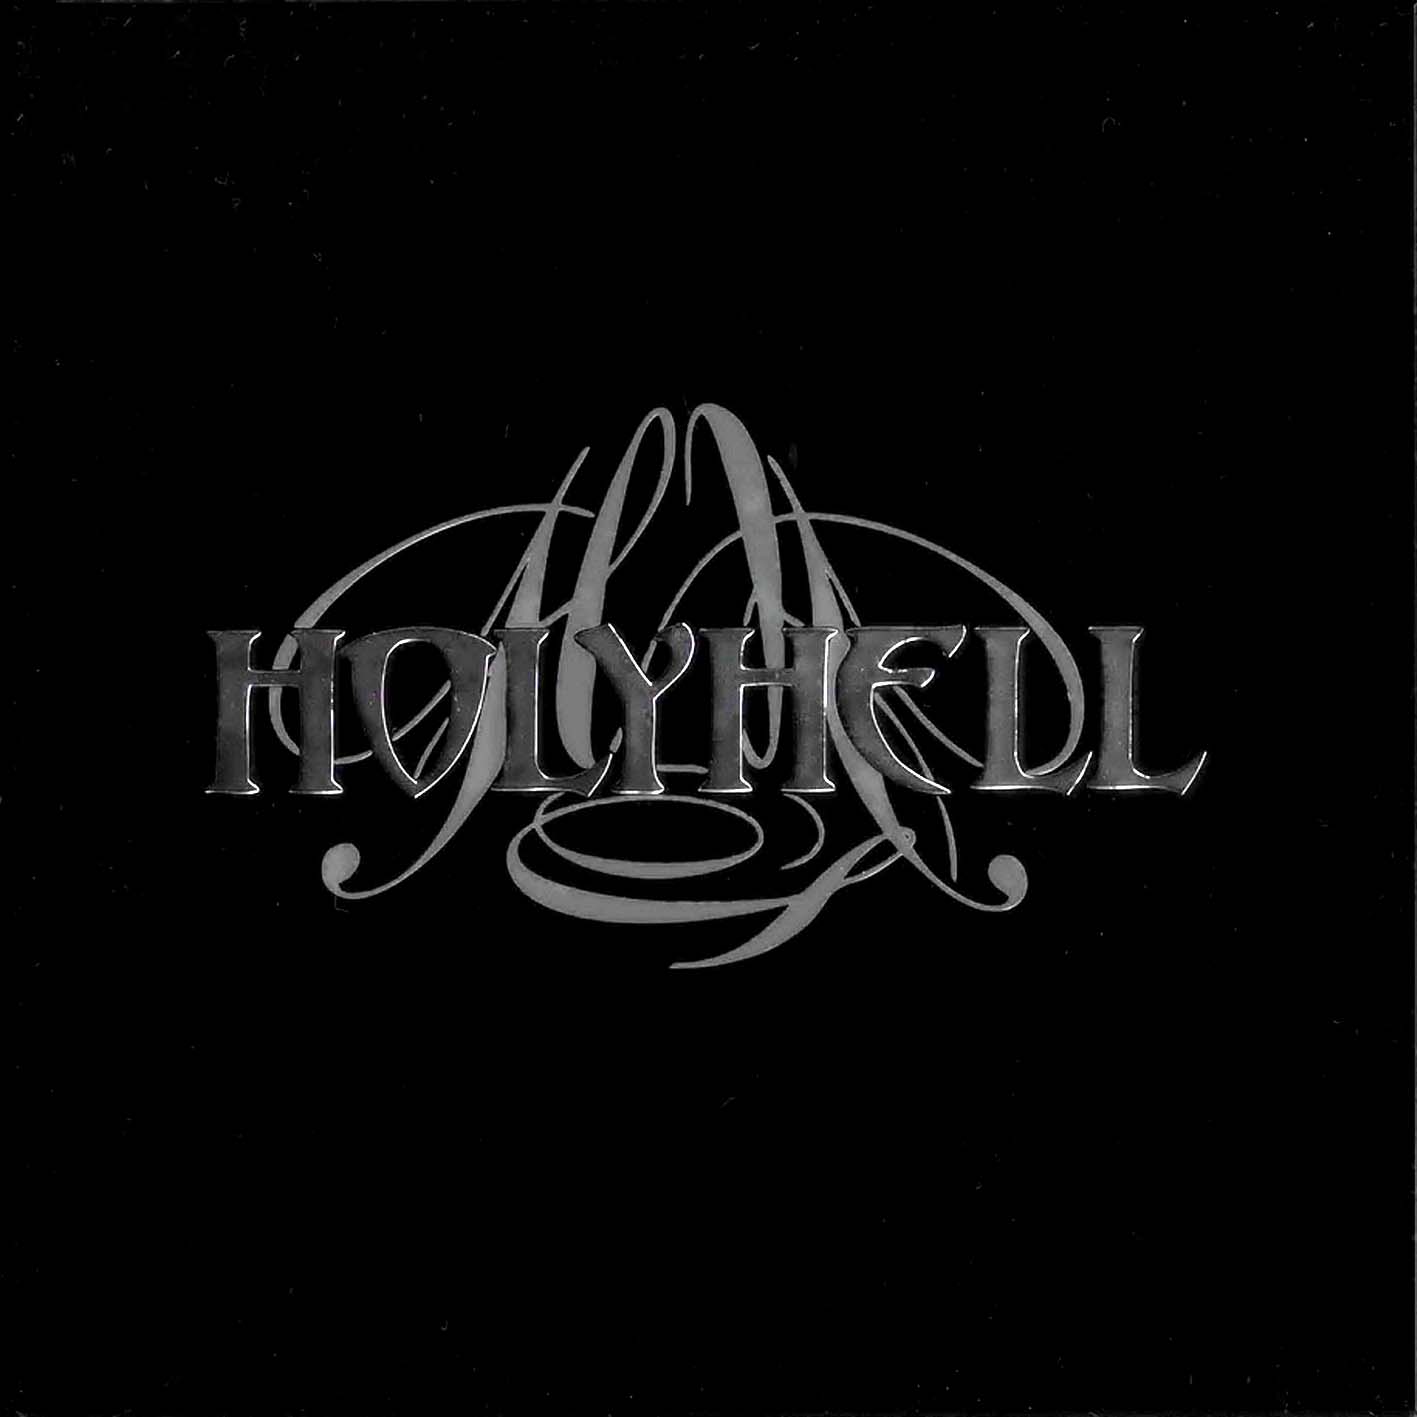  HolyHell - HolyHell (2009)